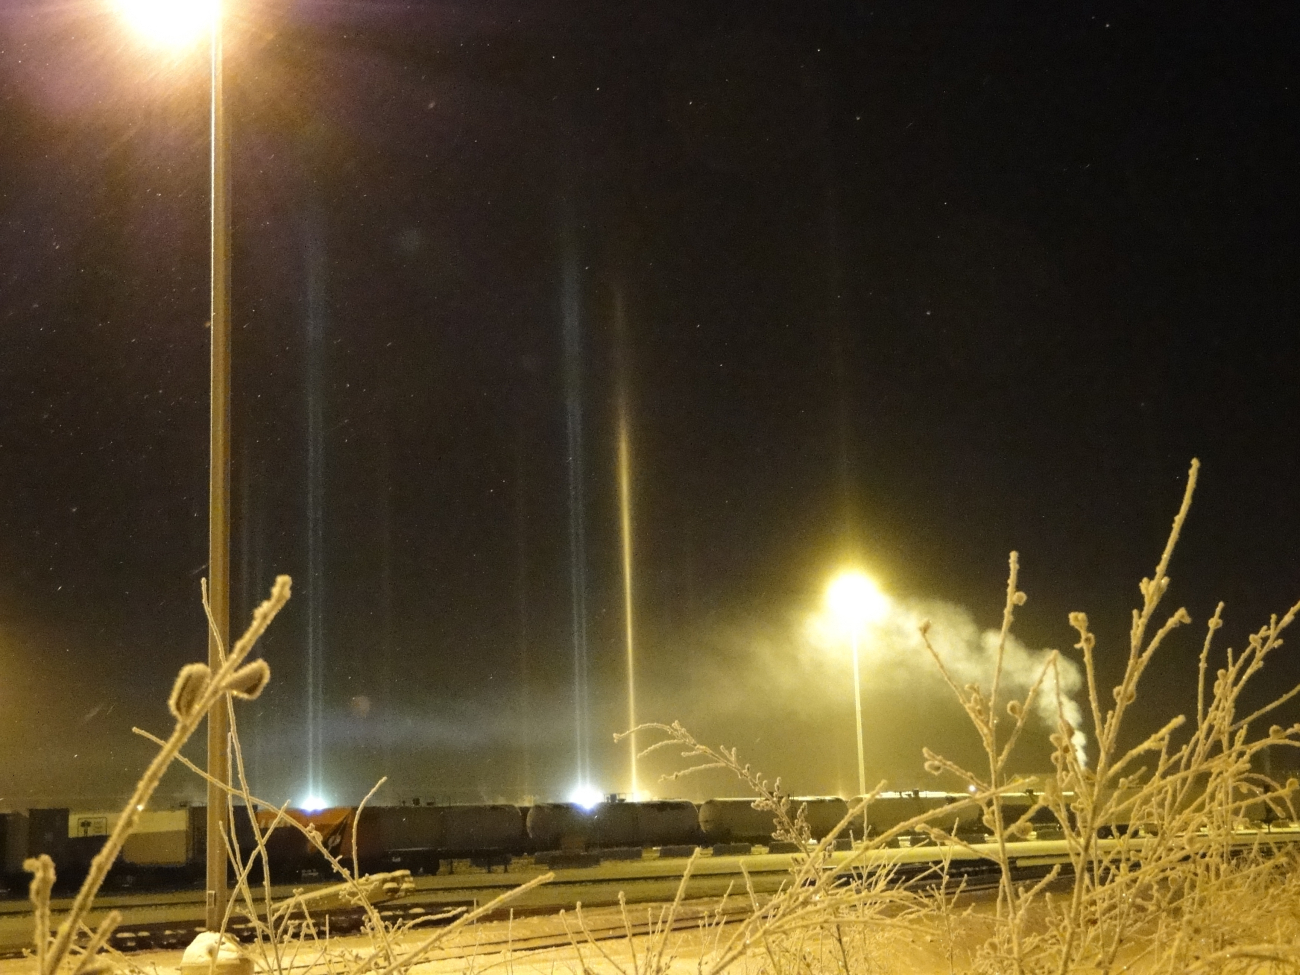 Light pillars penetrating ice fog at the Fairbanks train station